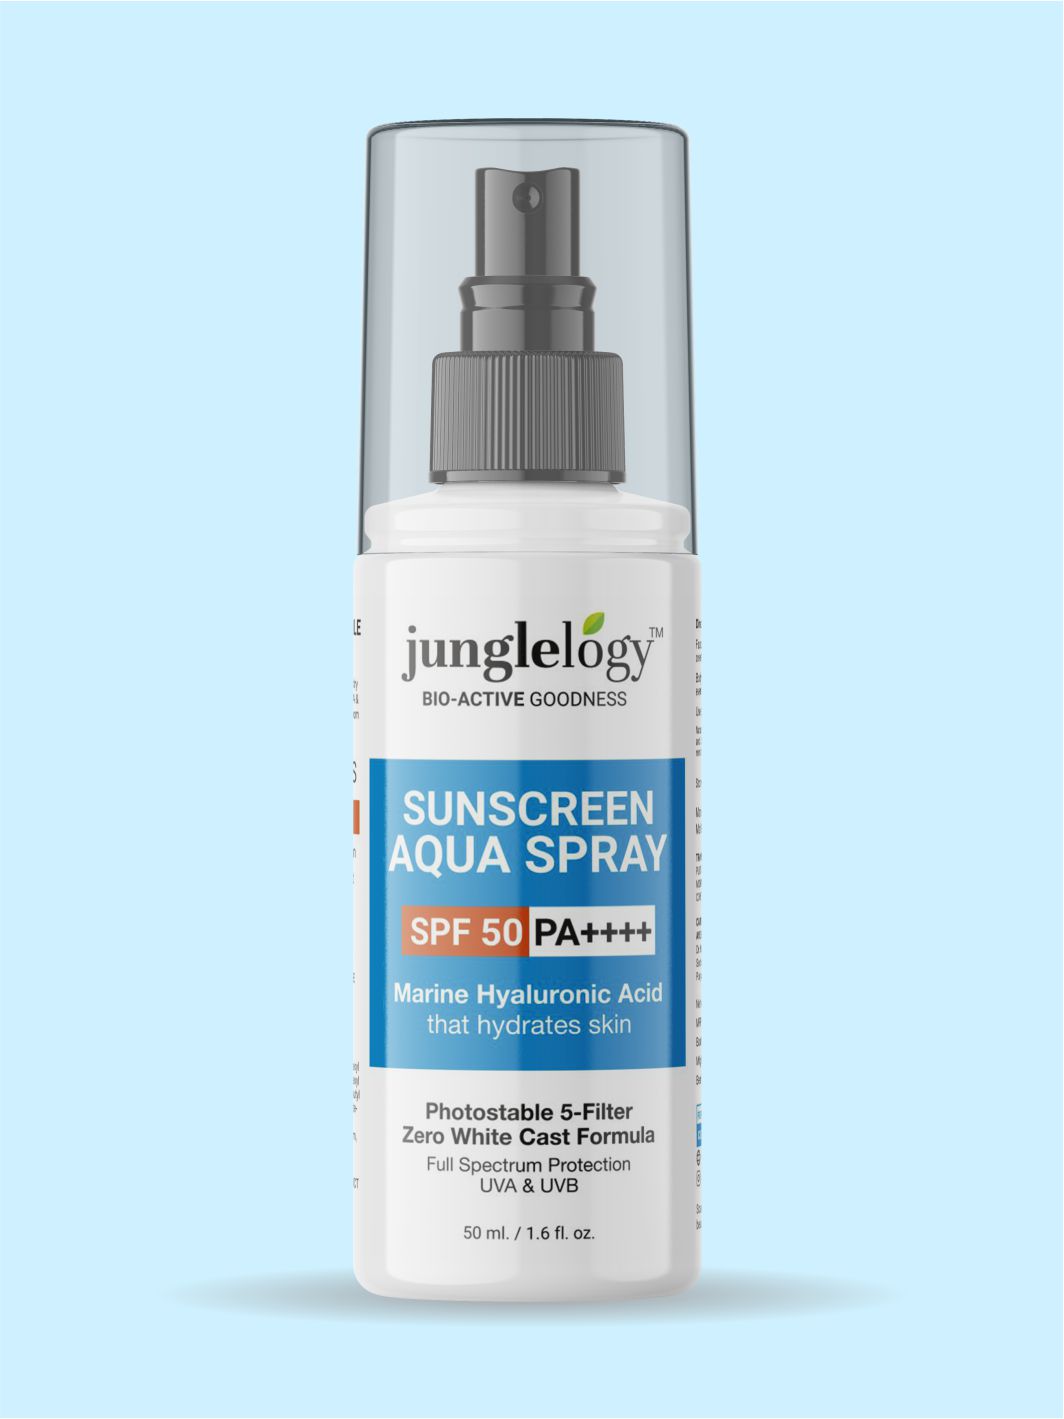 Aqua Sunscreen Spray SPF 50 PA++++ with Marine Hyaluronic Acid